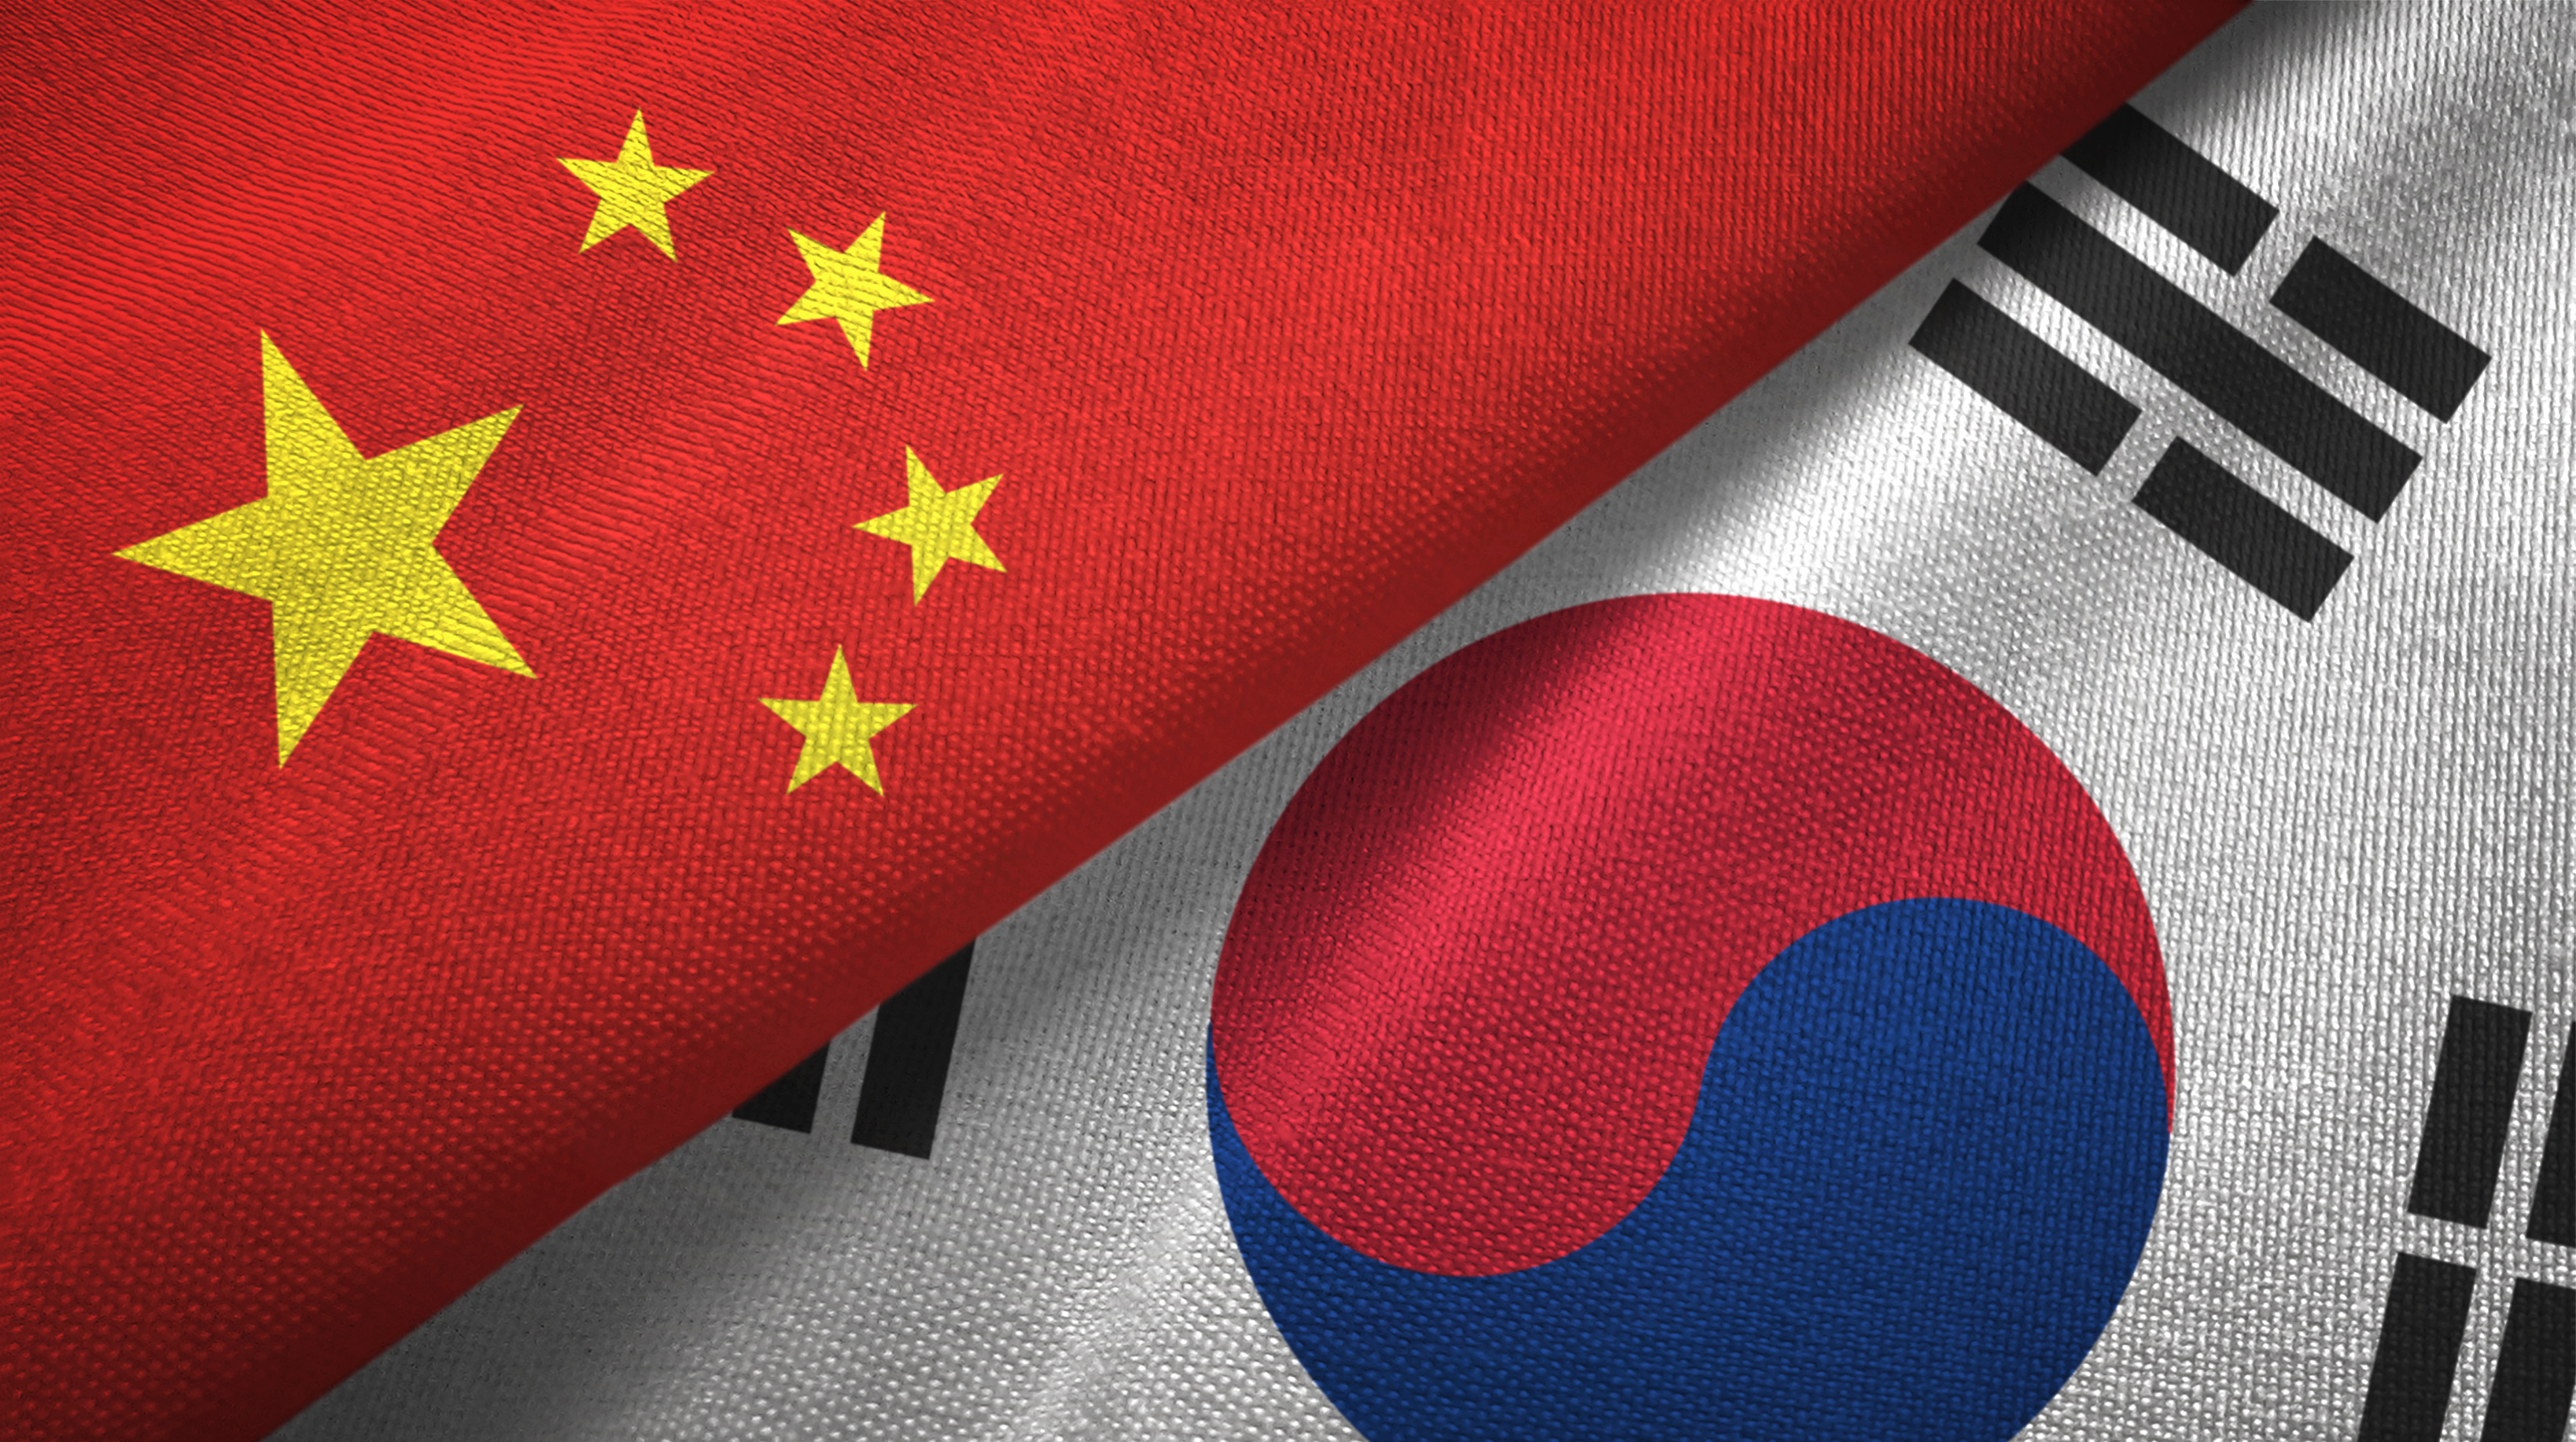 s-korea-claims-cross-border-cbdc-success-chinese-bank-chief-says-e-cny-will-boost-trade